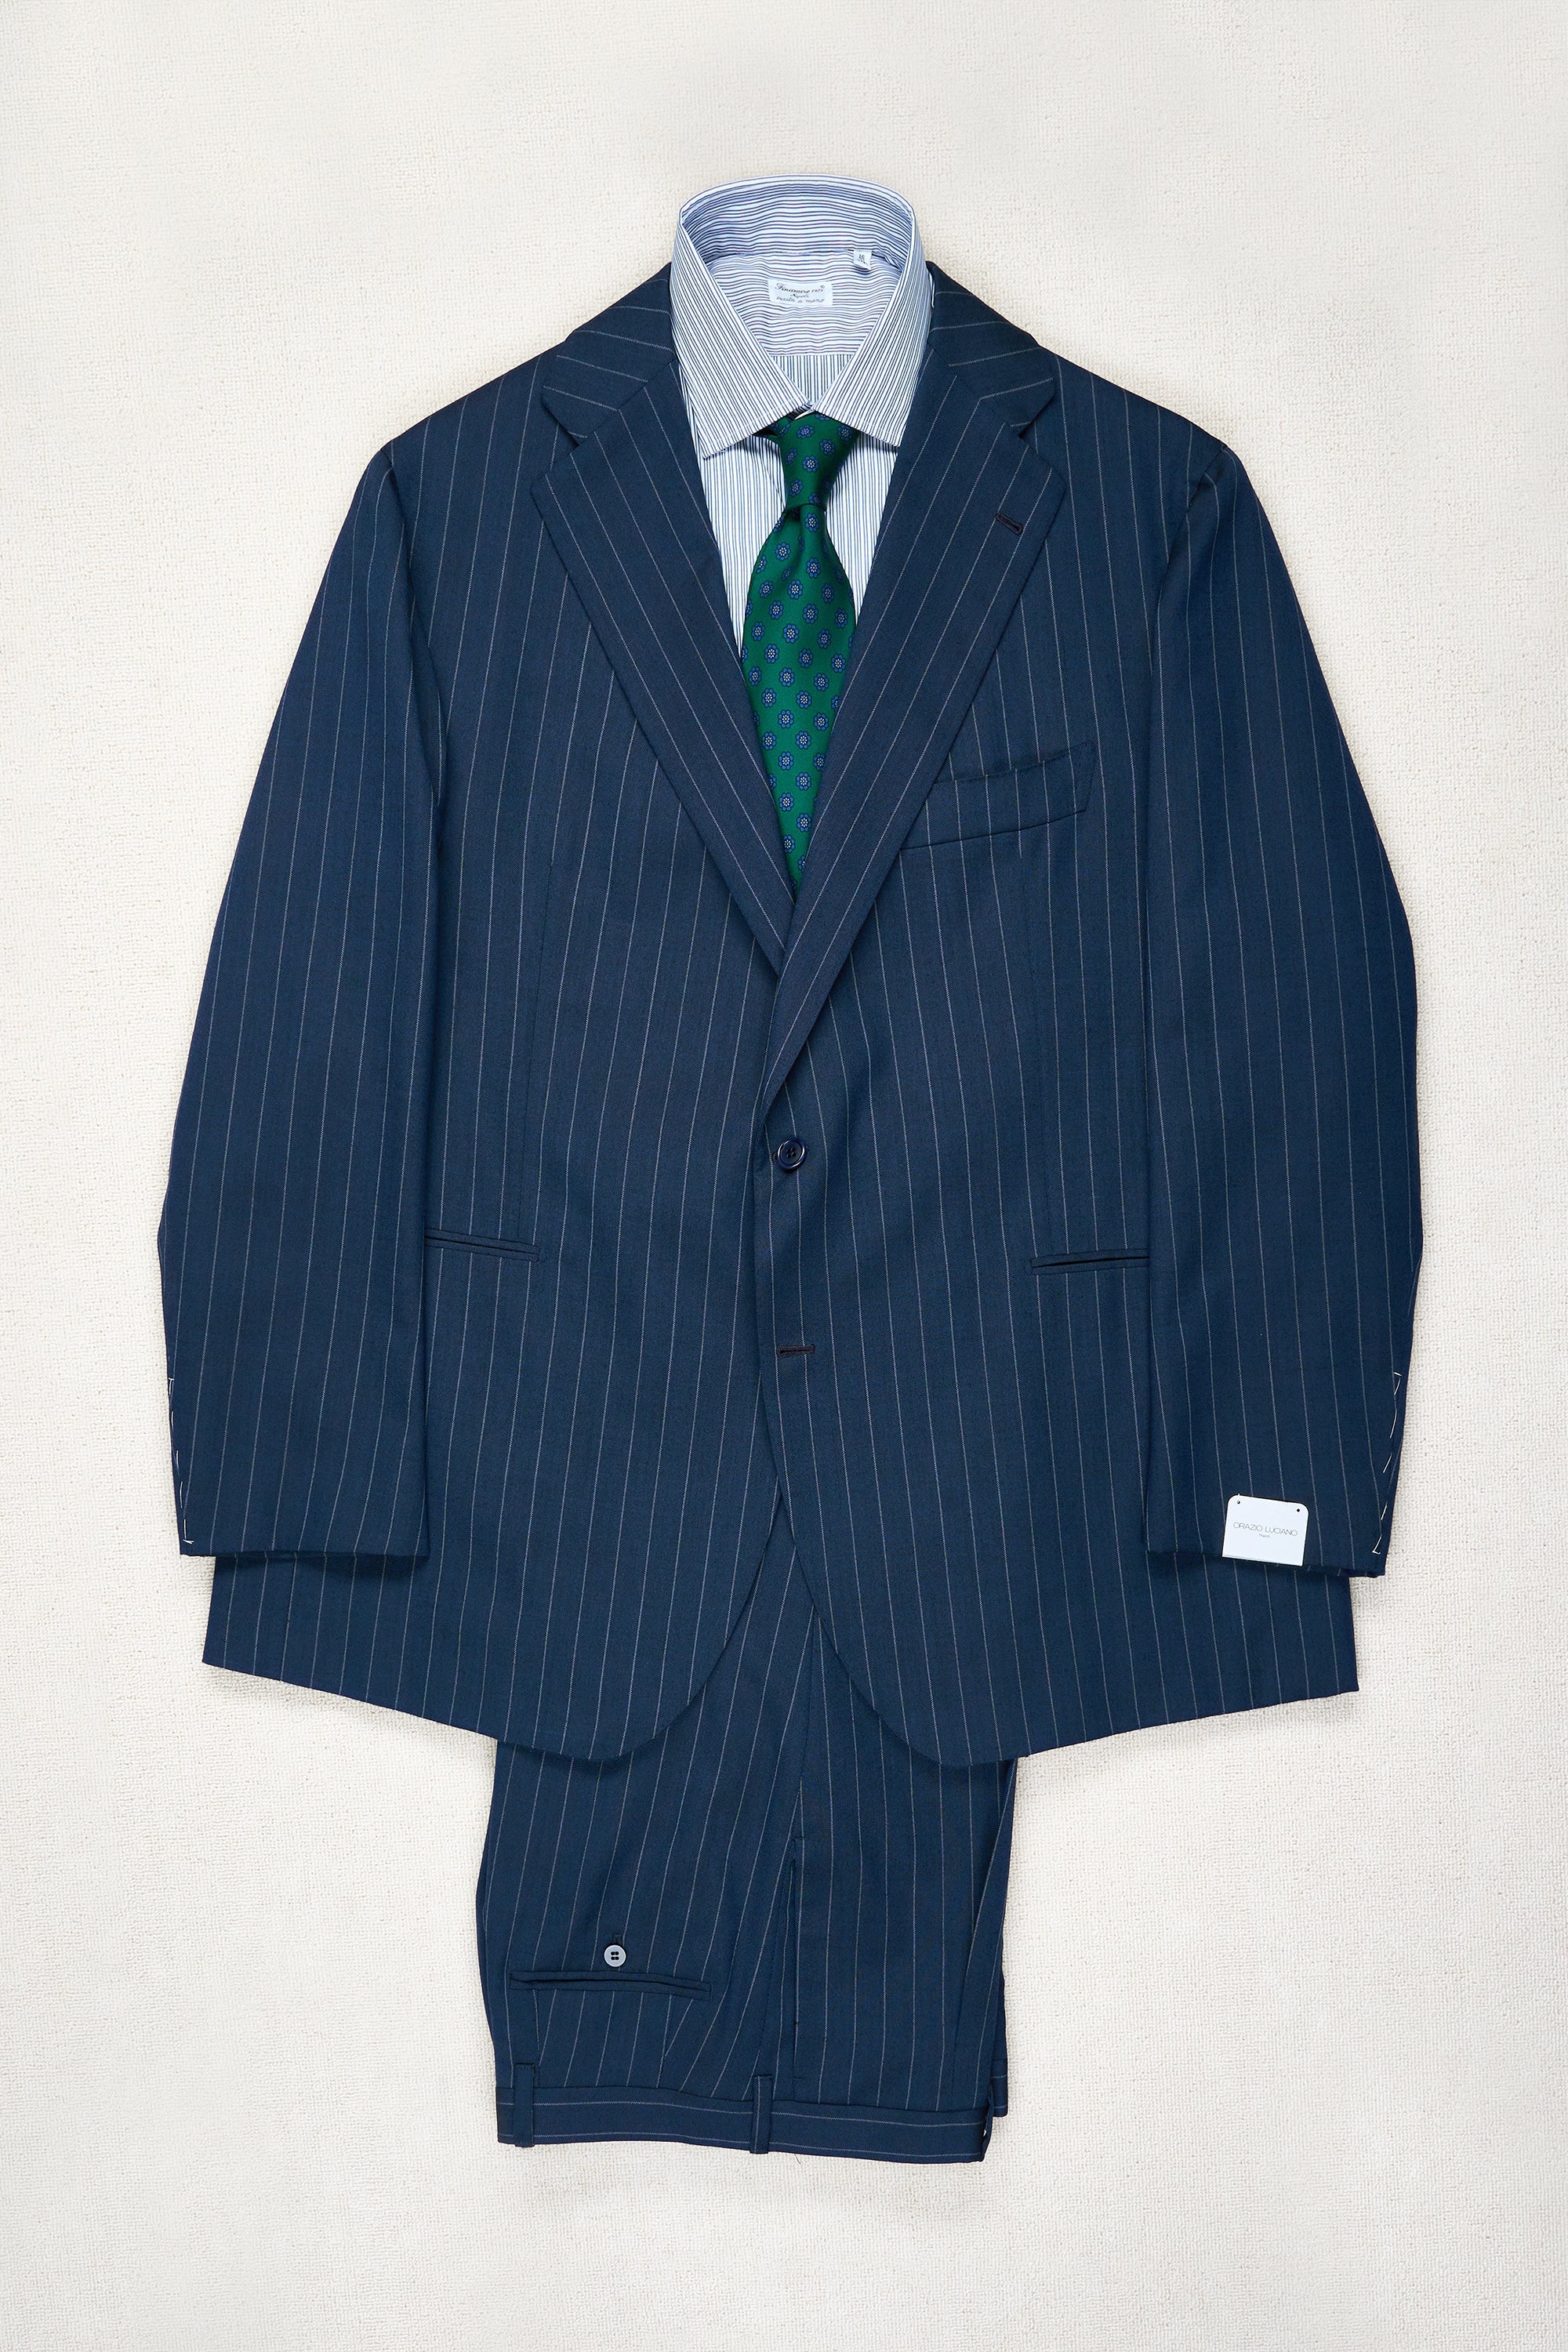 Orazio Luciano Blue with White Chalkstripe Wool Suit Bespoke